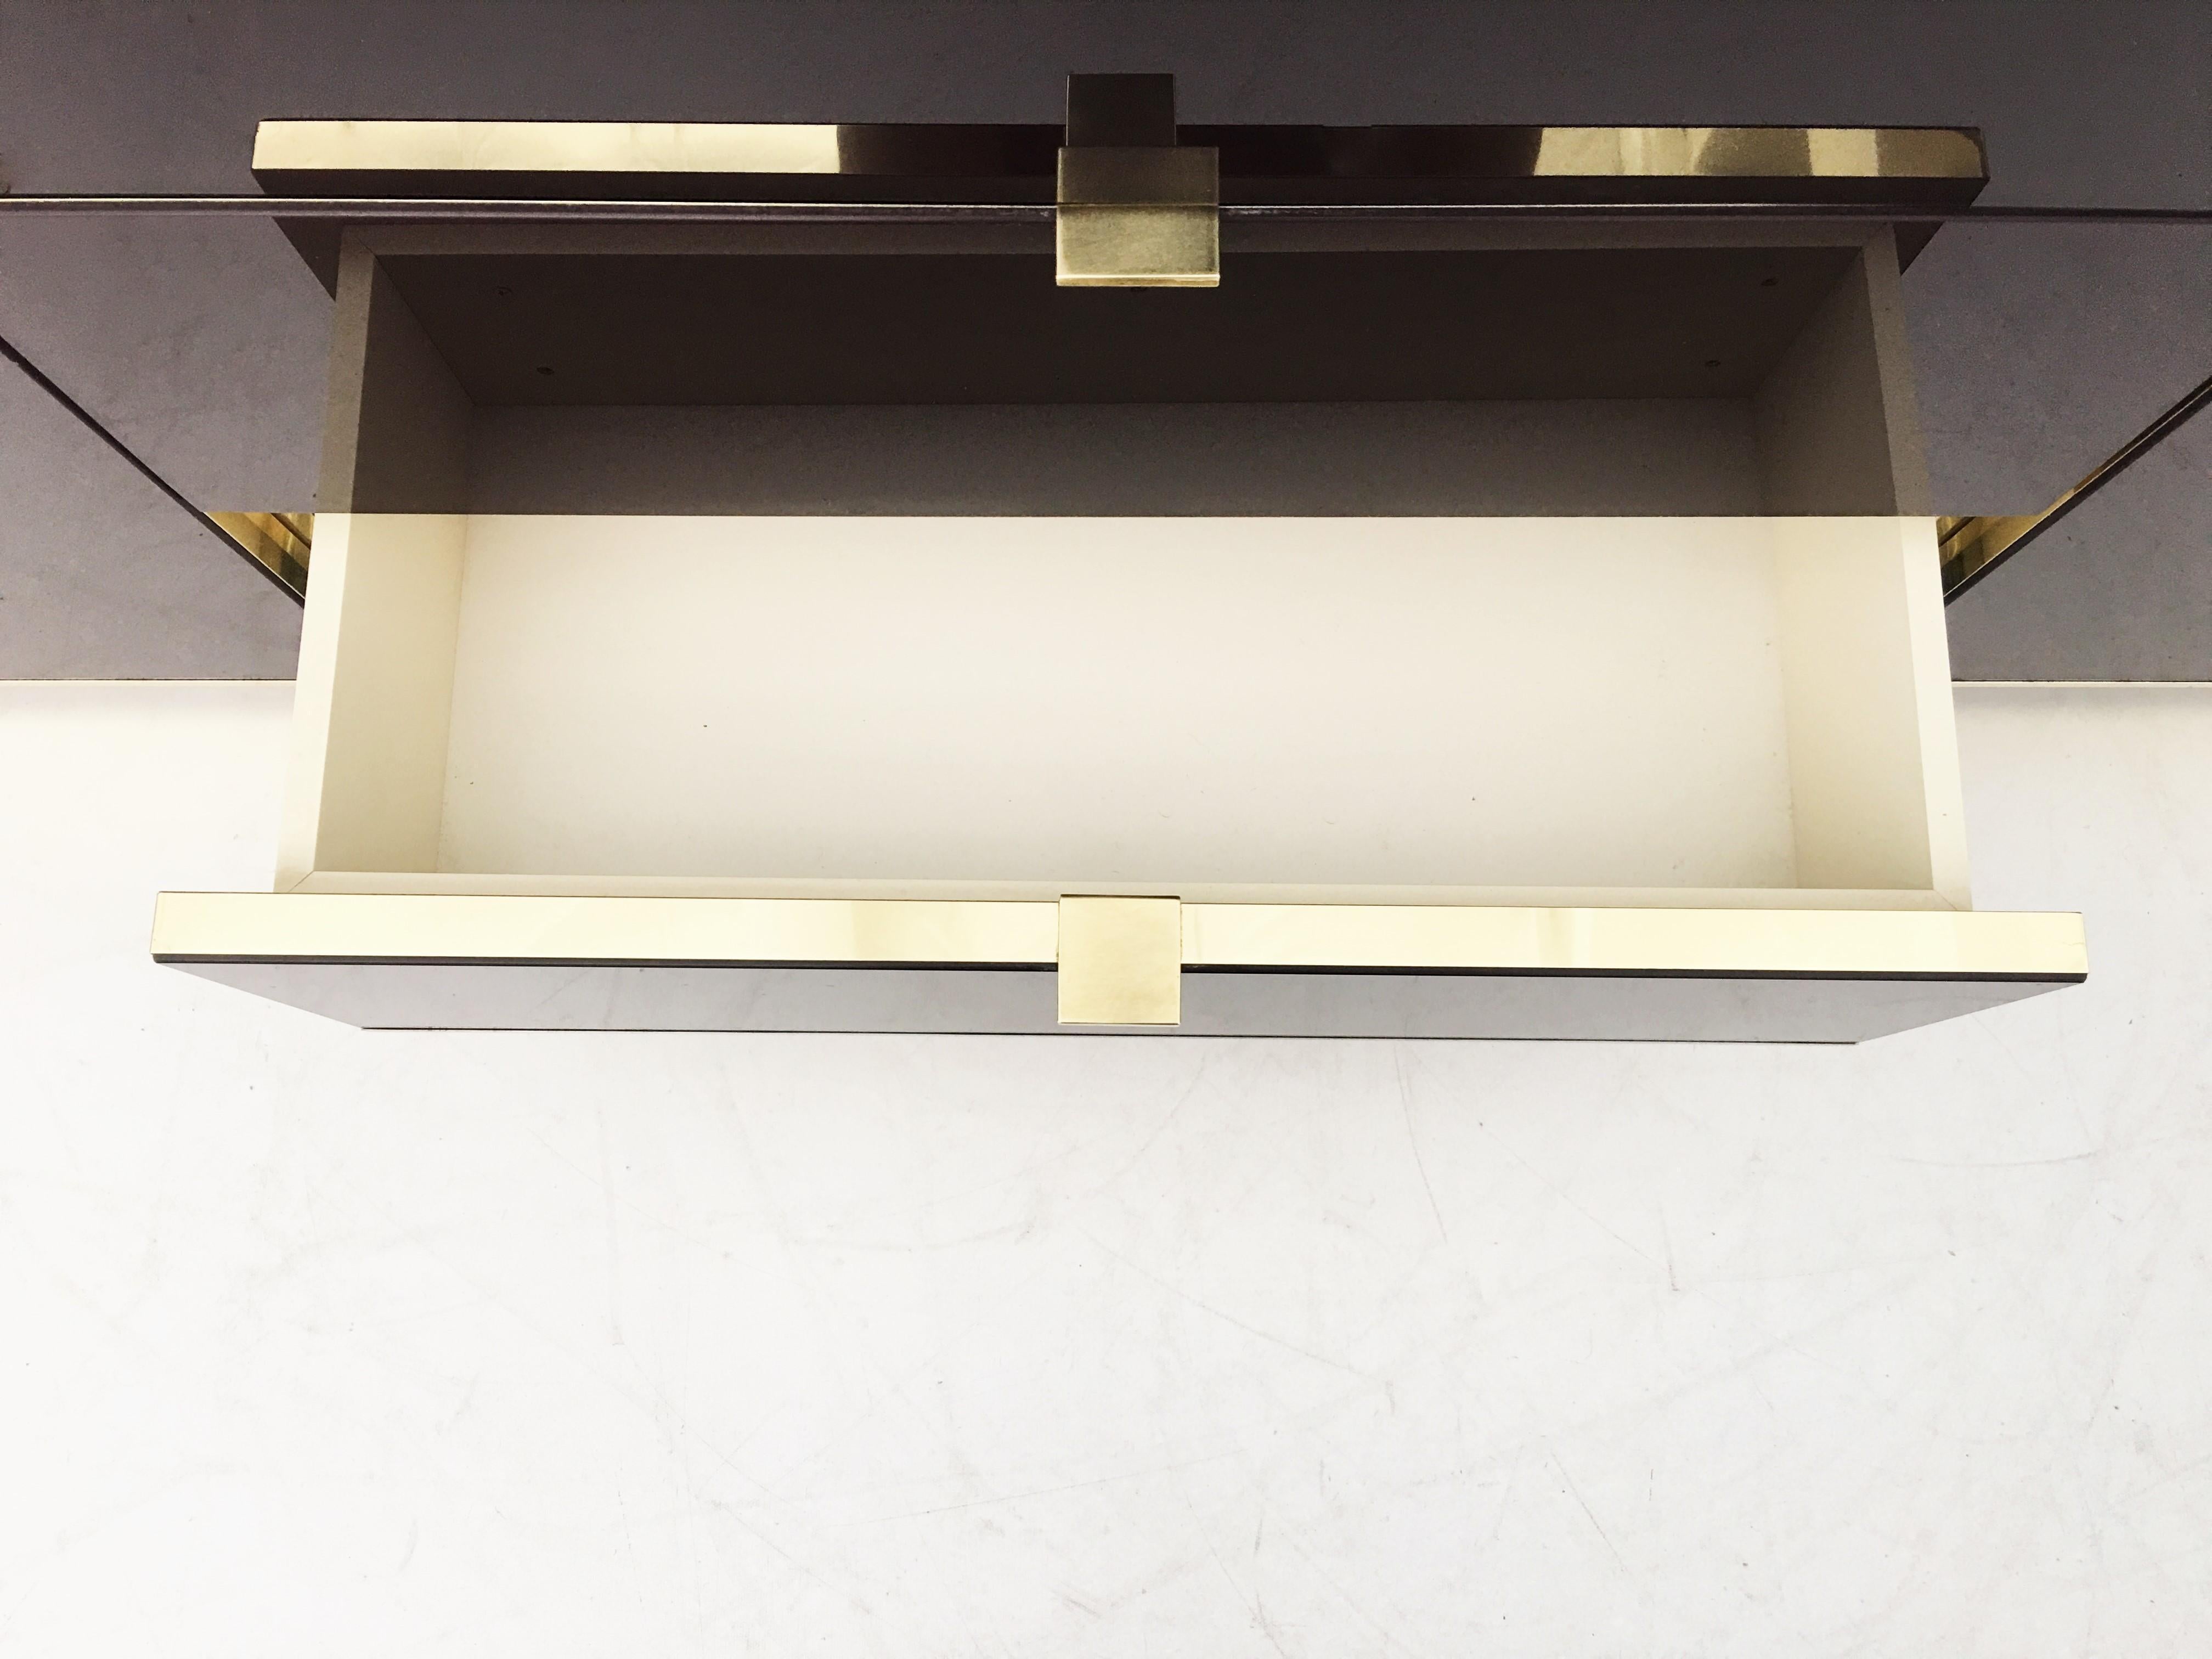 Hardwood Spectacular Mirrored and Brass Dresser/Credenza by Ello Furniture